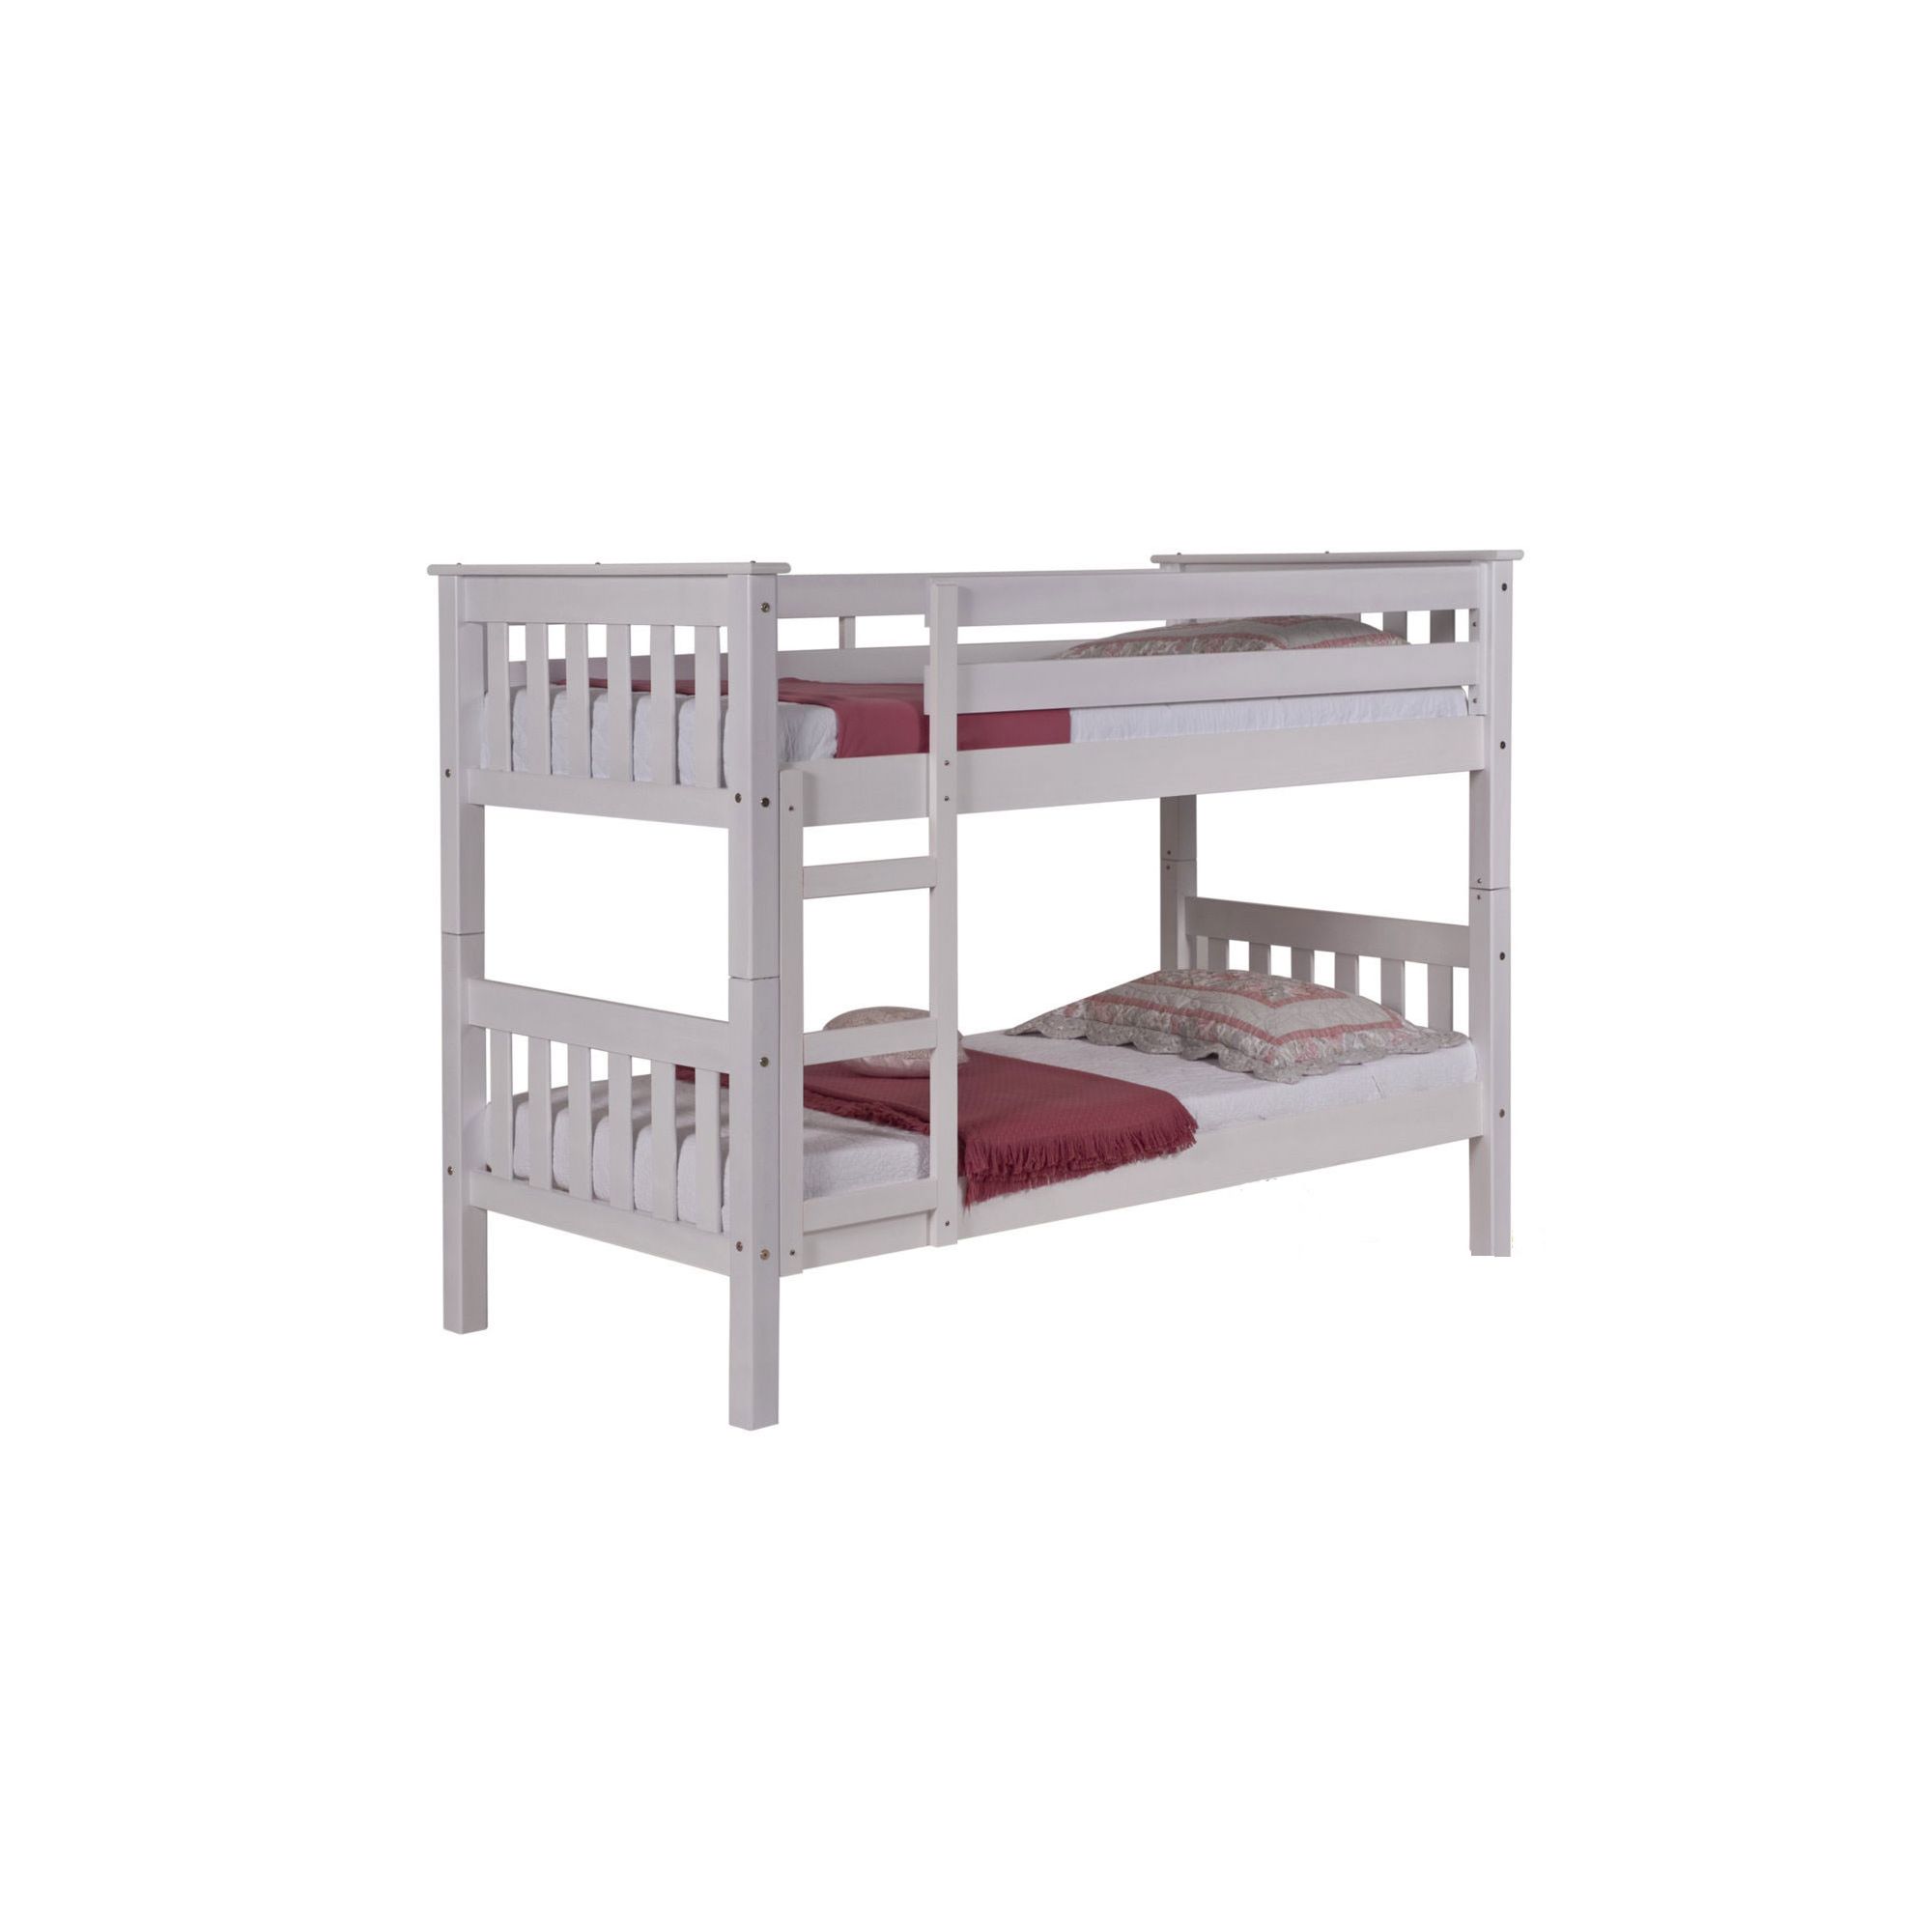 Verona Barcelona Short Length Kids Bunk Bed - Small Single - Whitewash at Tesco Direct